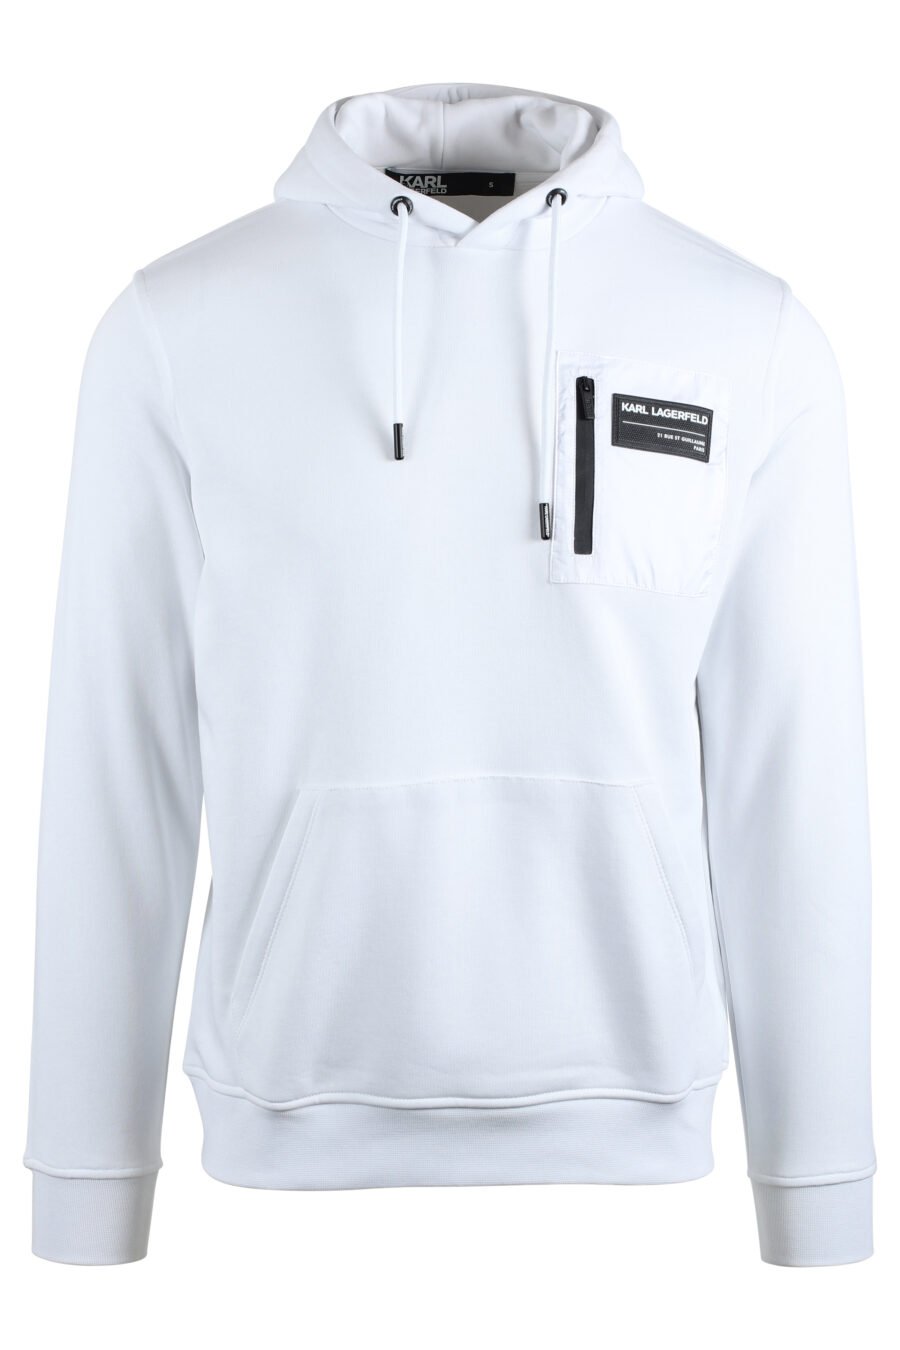 Sweatshirt branca com capuz e logótipo branco - IMG 4775